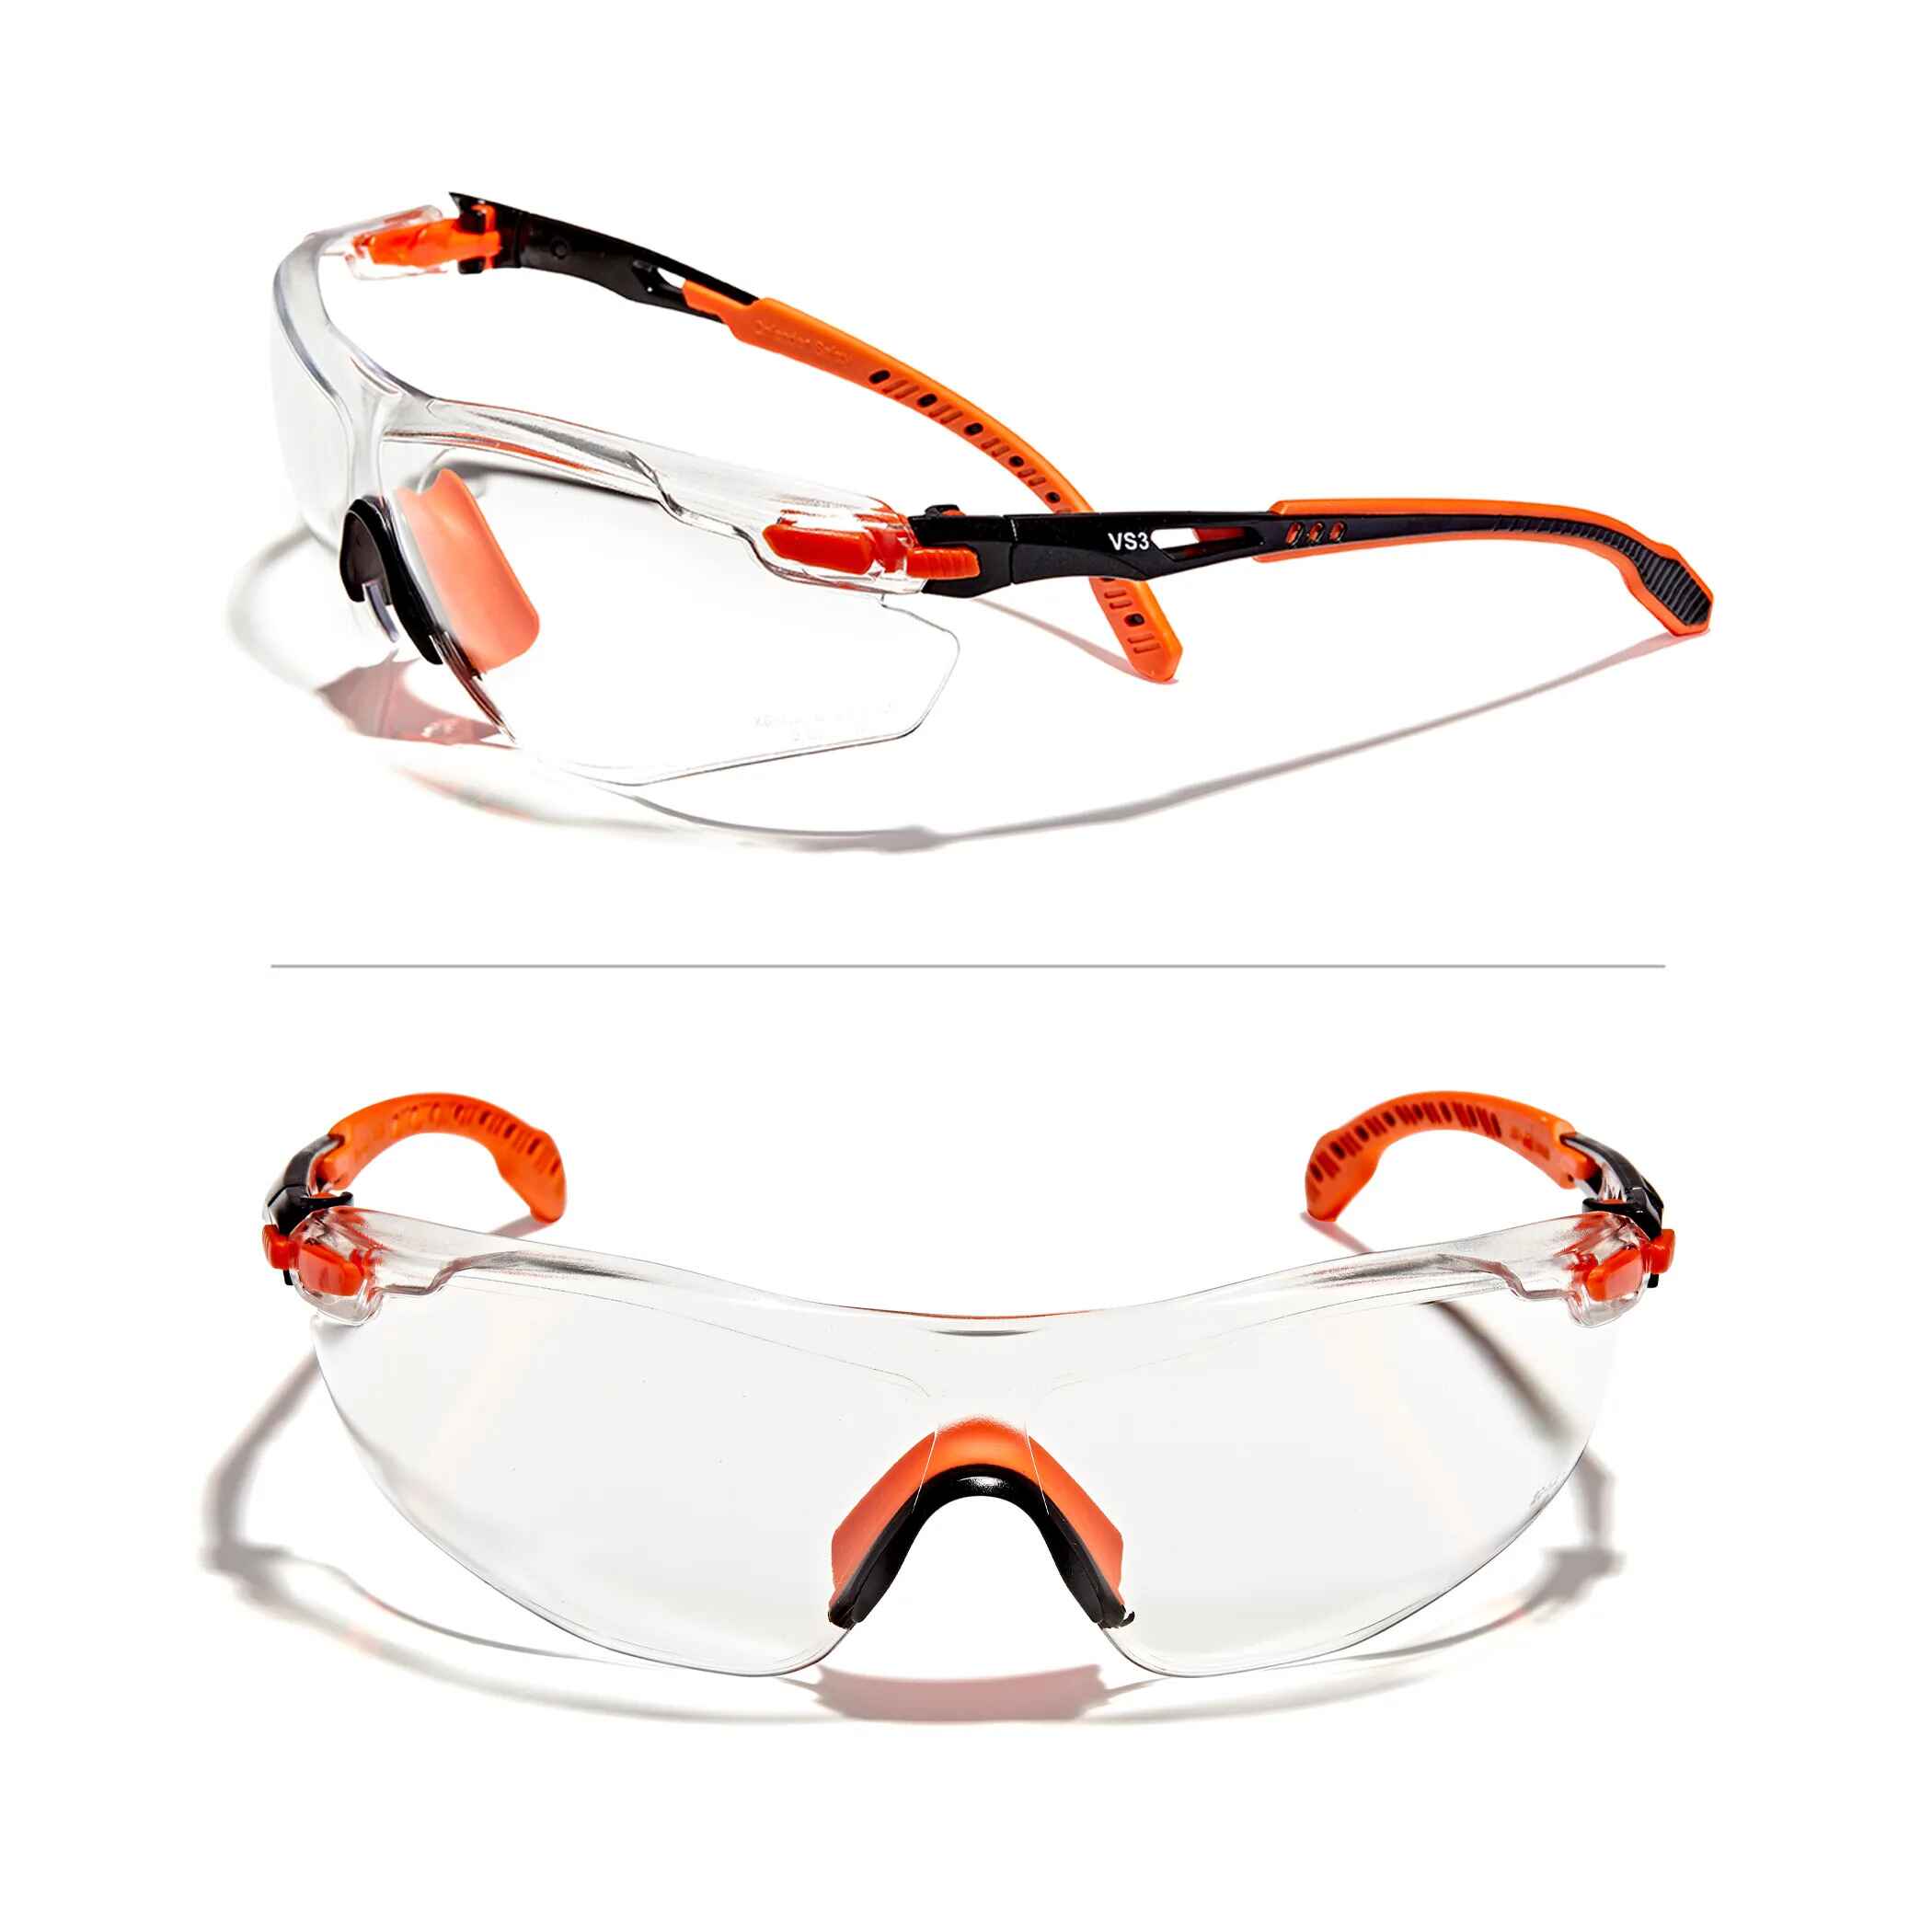 OPTIFENSE™ VS3 Anti Fog, Premium CLEAR Safety Glasses, ANSI Z87+ - Defender Safety